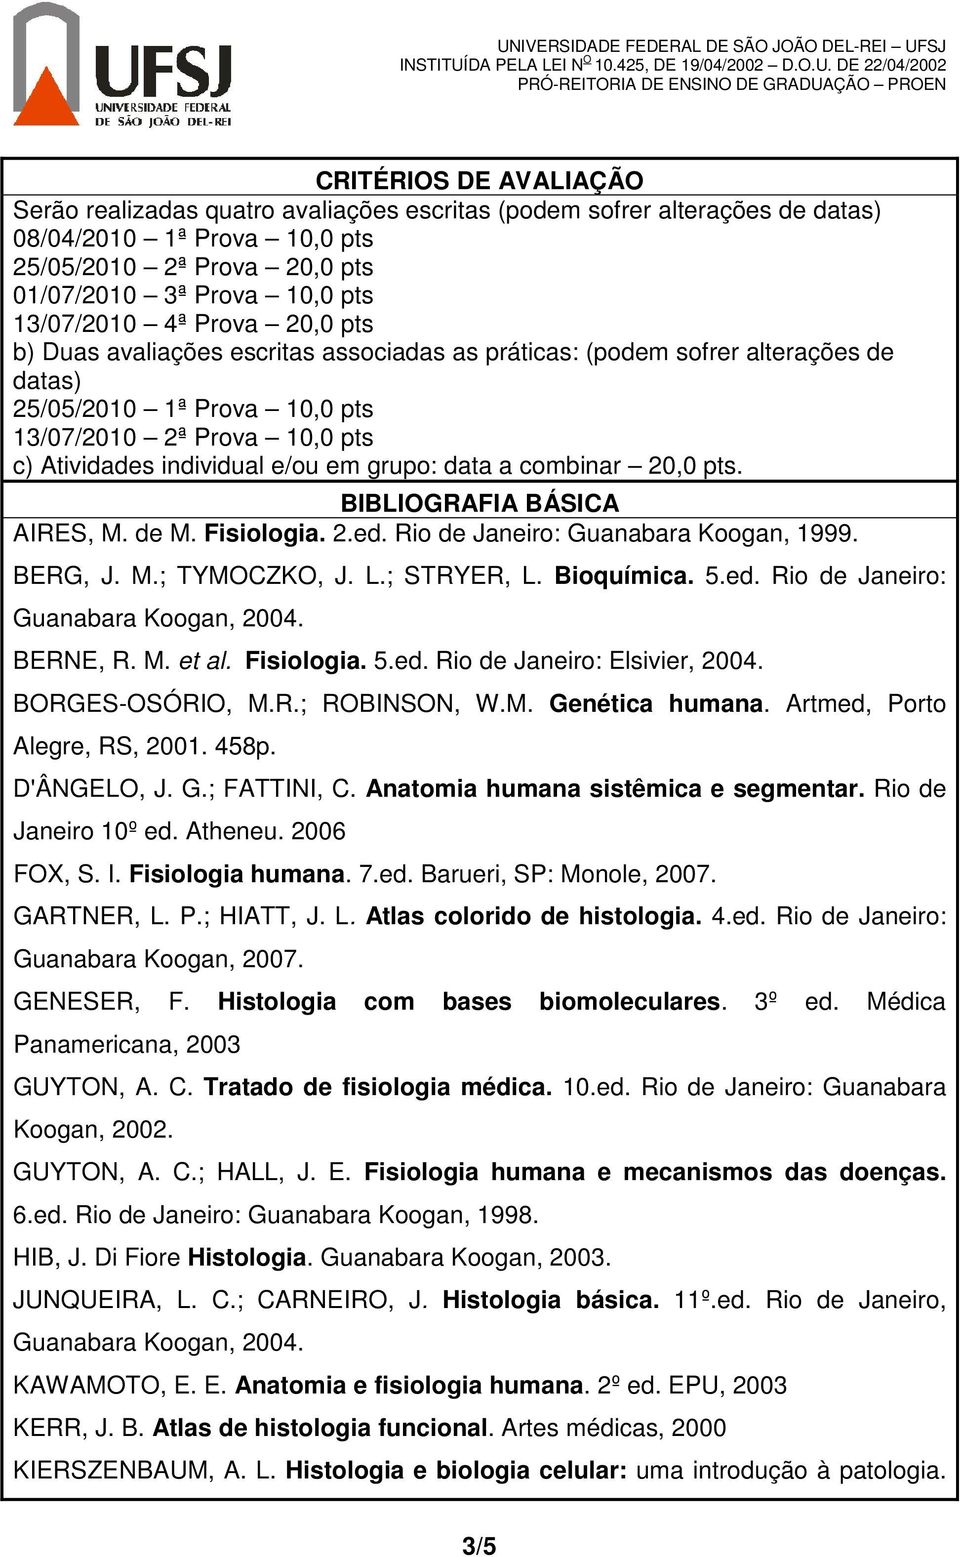 grupo: data a combinar 20,0 pts. BIBLIOGRAFIA BÁSICA AIRES, M. de M. Fisiologia. 2.ed. Rio de Janeiro: Guanabara Koogan, 1999. BERG, J. M.; TYMOCZKO, J. L.; STRYER, L. Bioquímica. 5.ed. Rio de Janeiro: Guanabara Koogan, 2004.